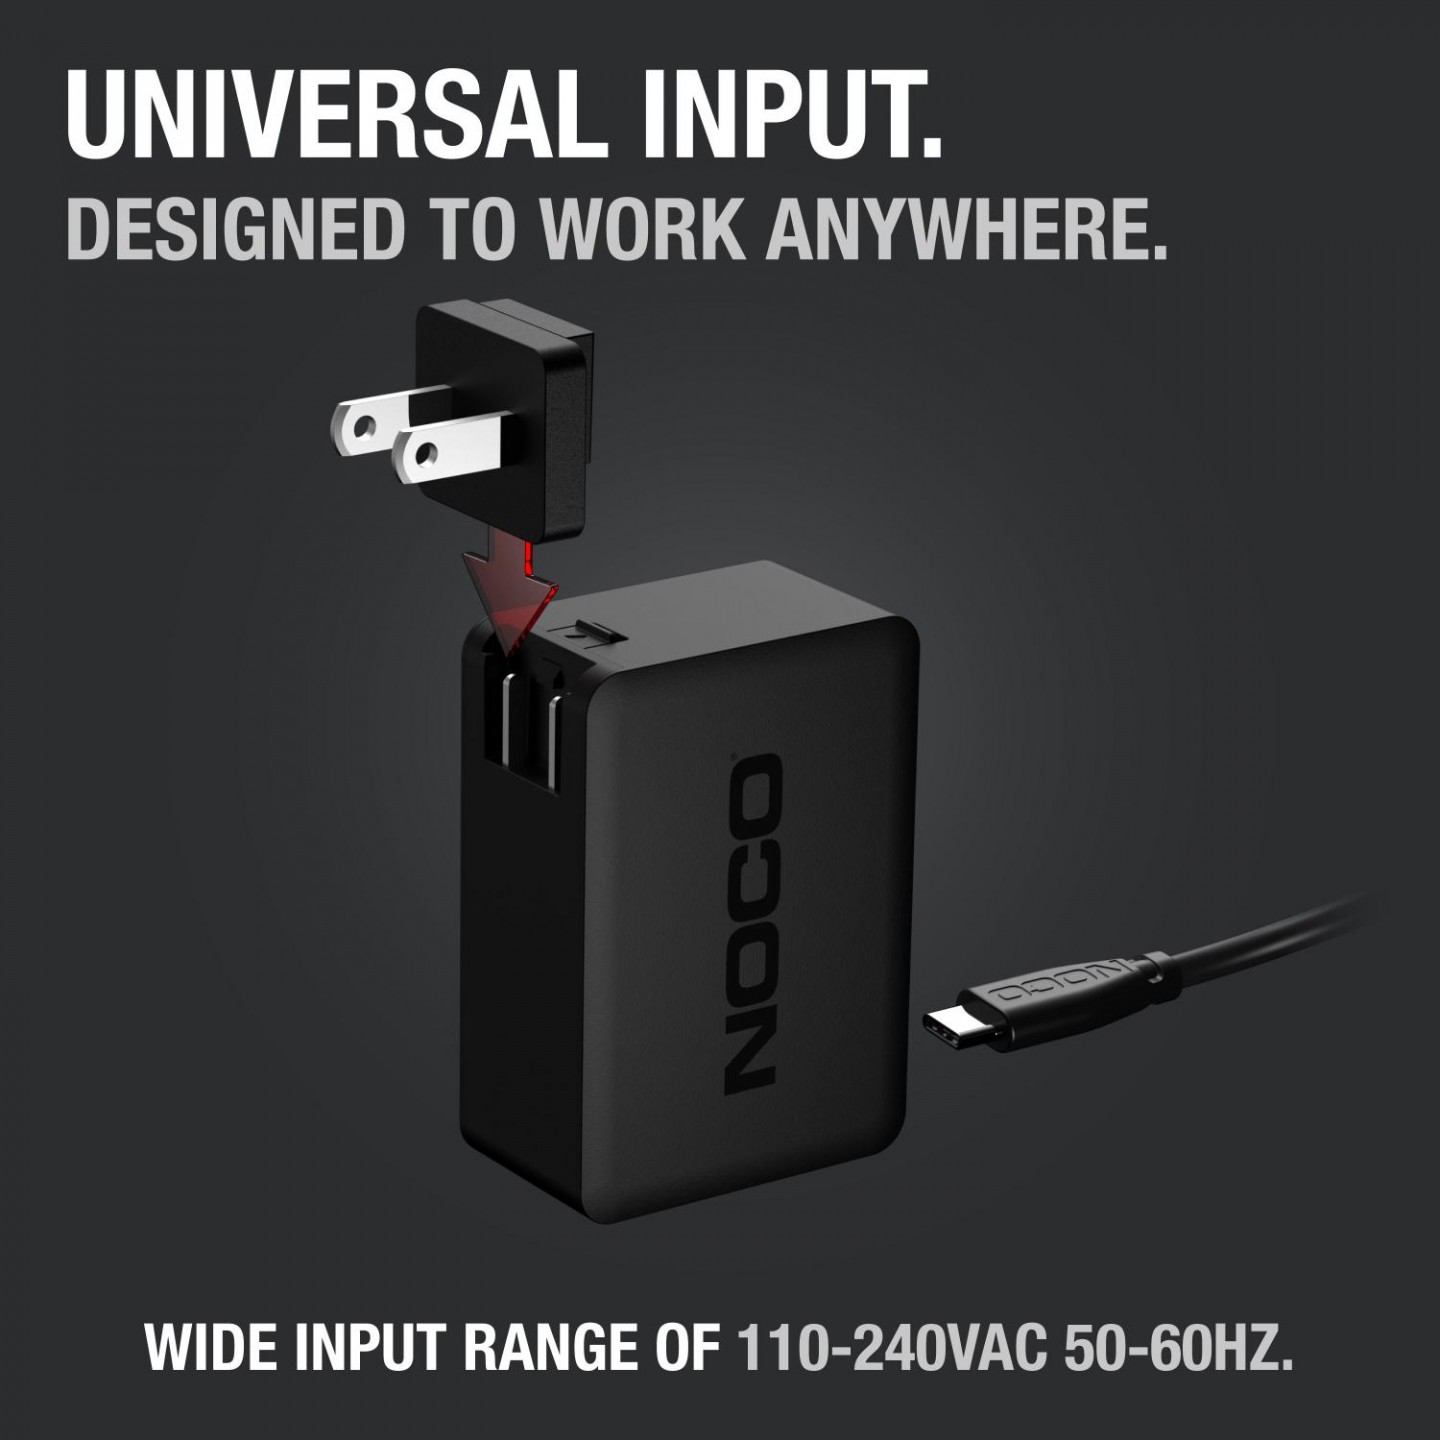 Chargeur USB-C Power Delivery (65W) - USB - Garantie 3 ans LDLC